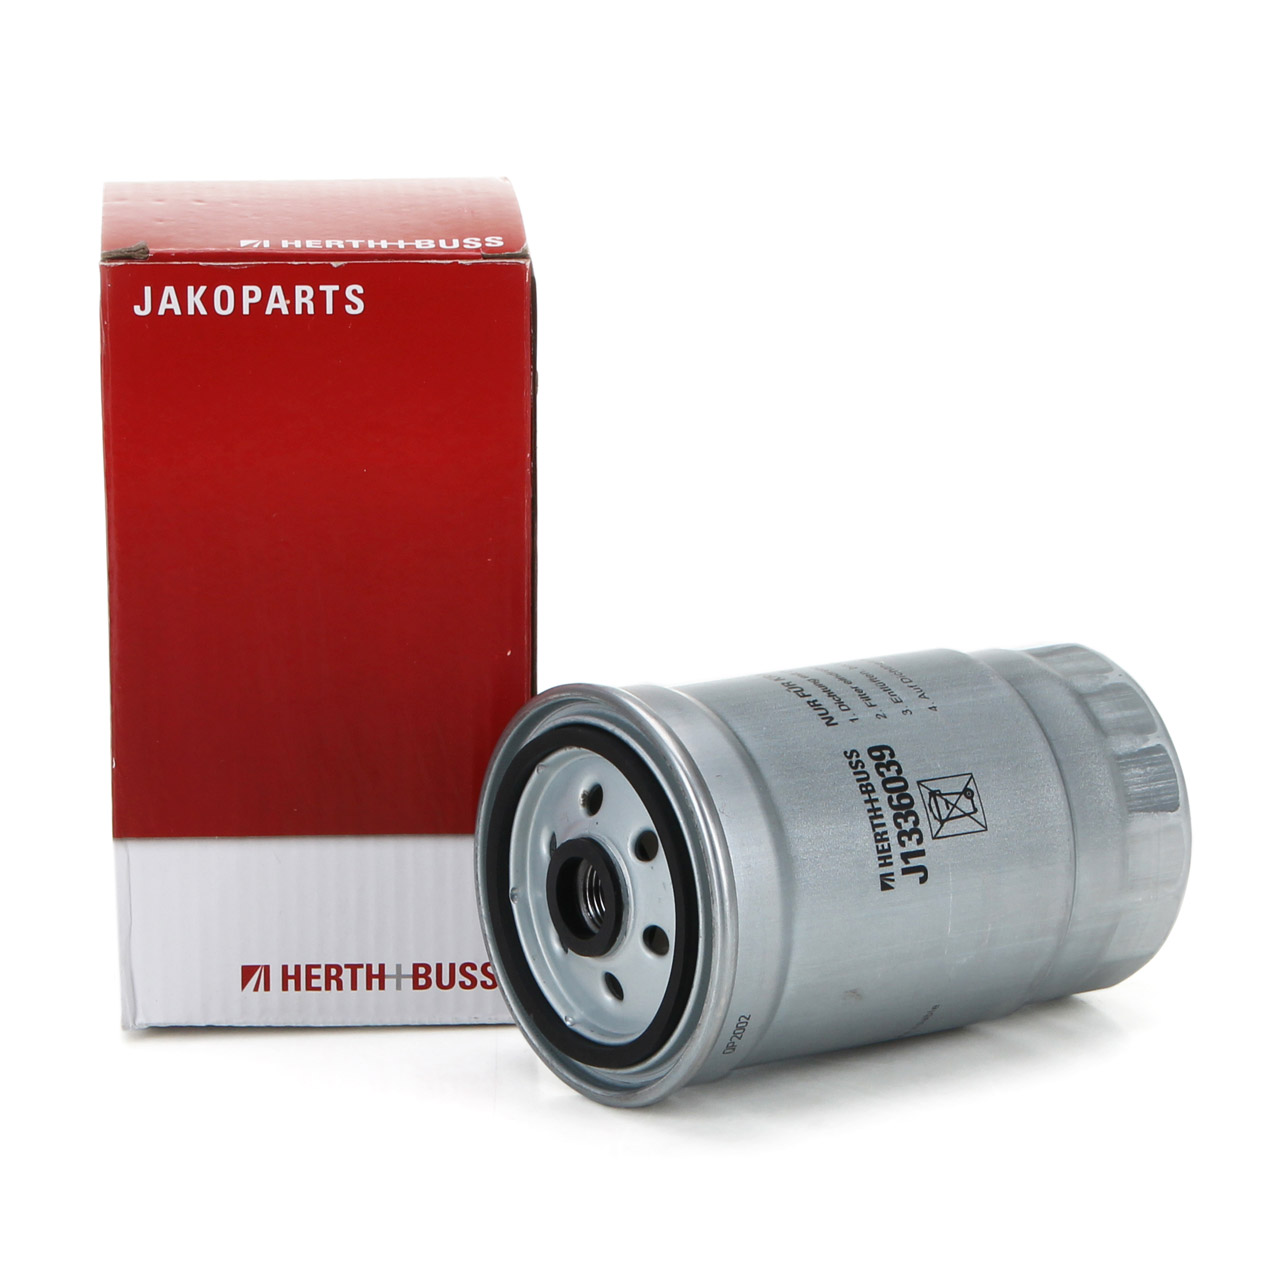 HERTH+BUSS JAKOPARTS Kraftstofffilter Diesel DAIHATSU Hijet 1.2 D 1.4 D